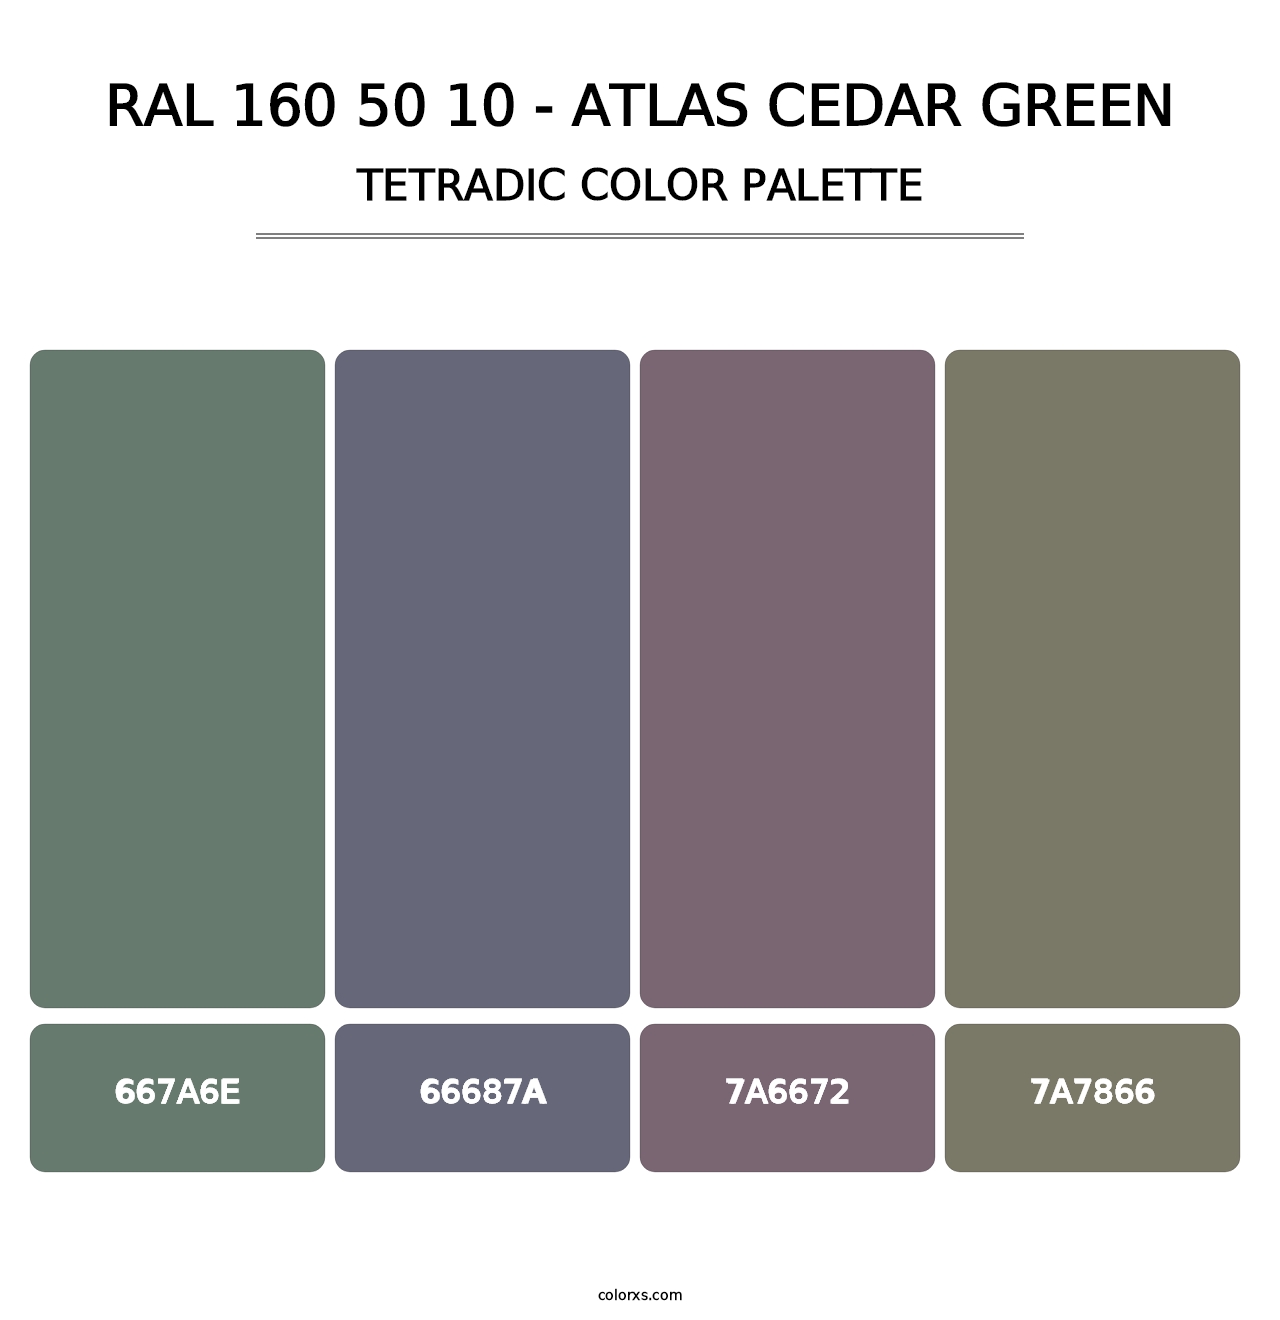 RAL 160 50 10 - Atlas Cedar Green - Tetradic Color Palette